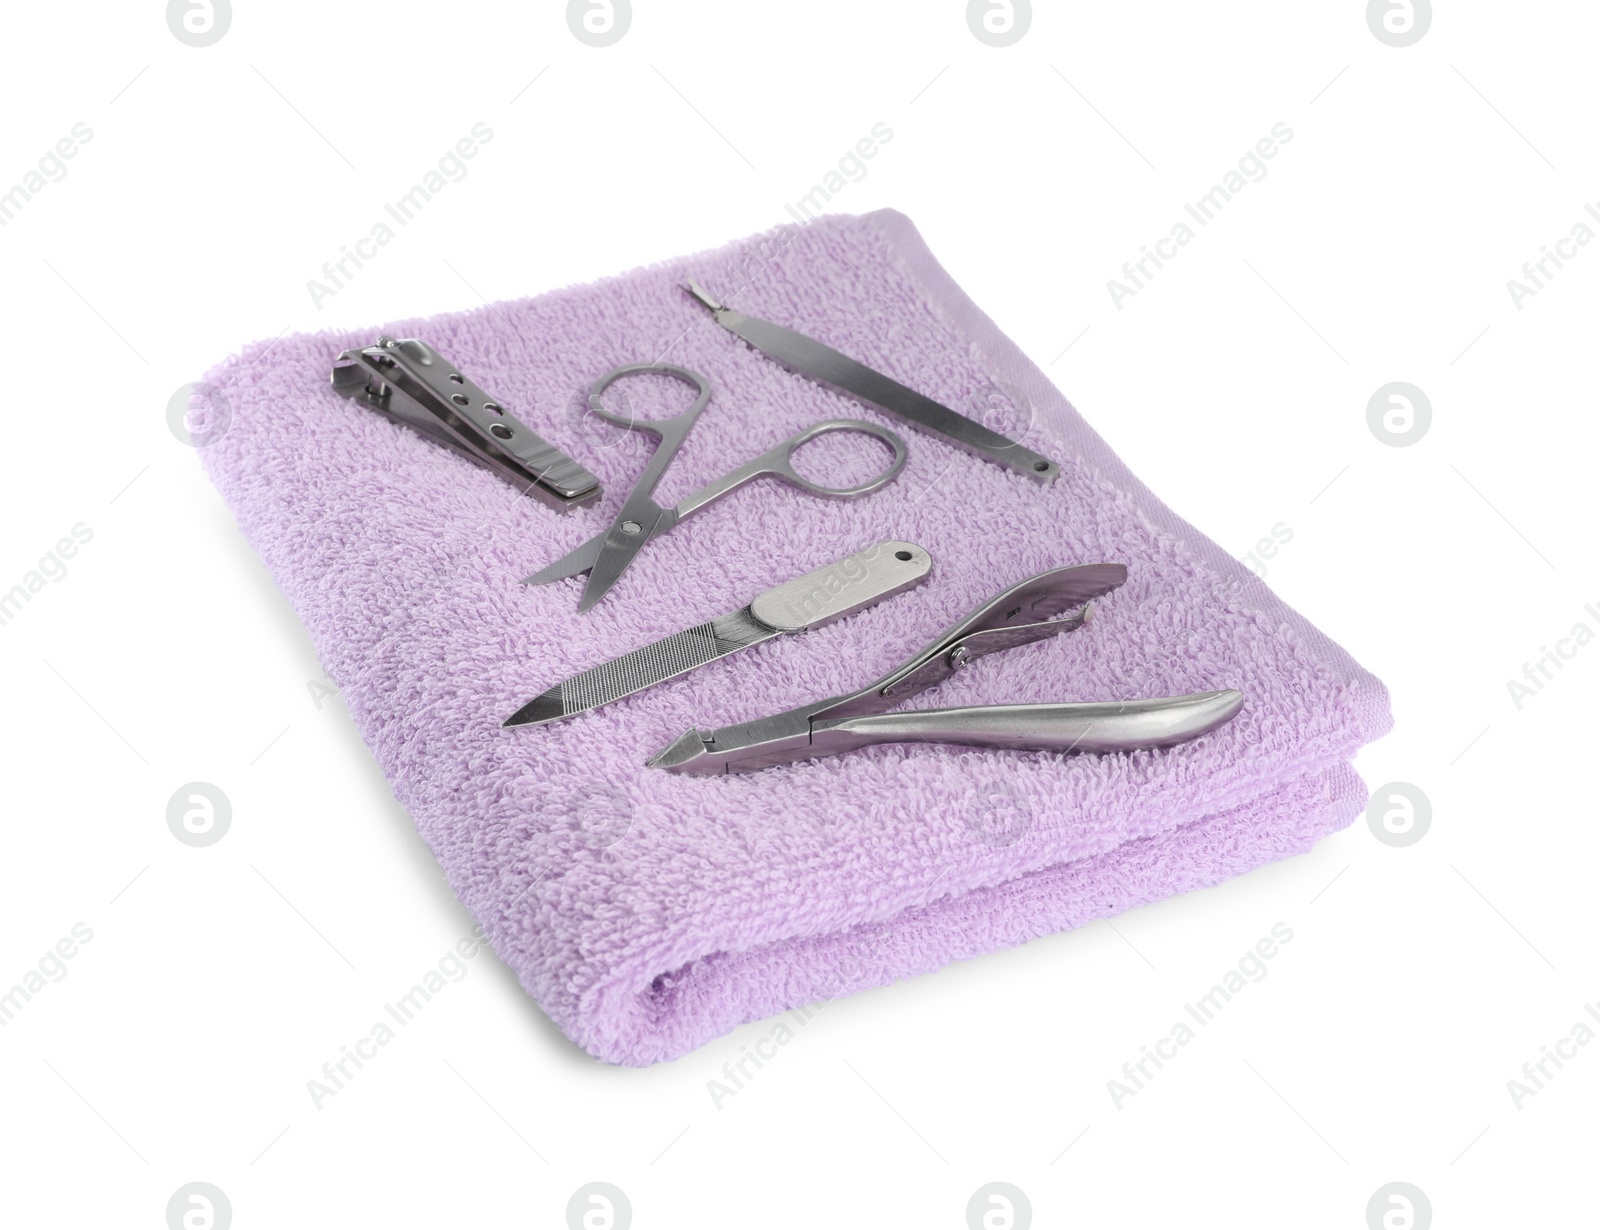 Photo of Manicure set on soft towel, white background